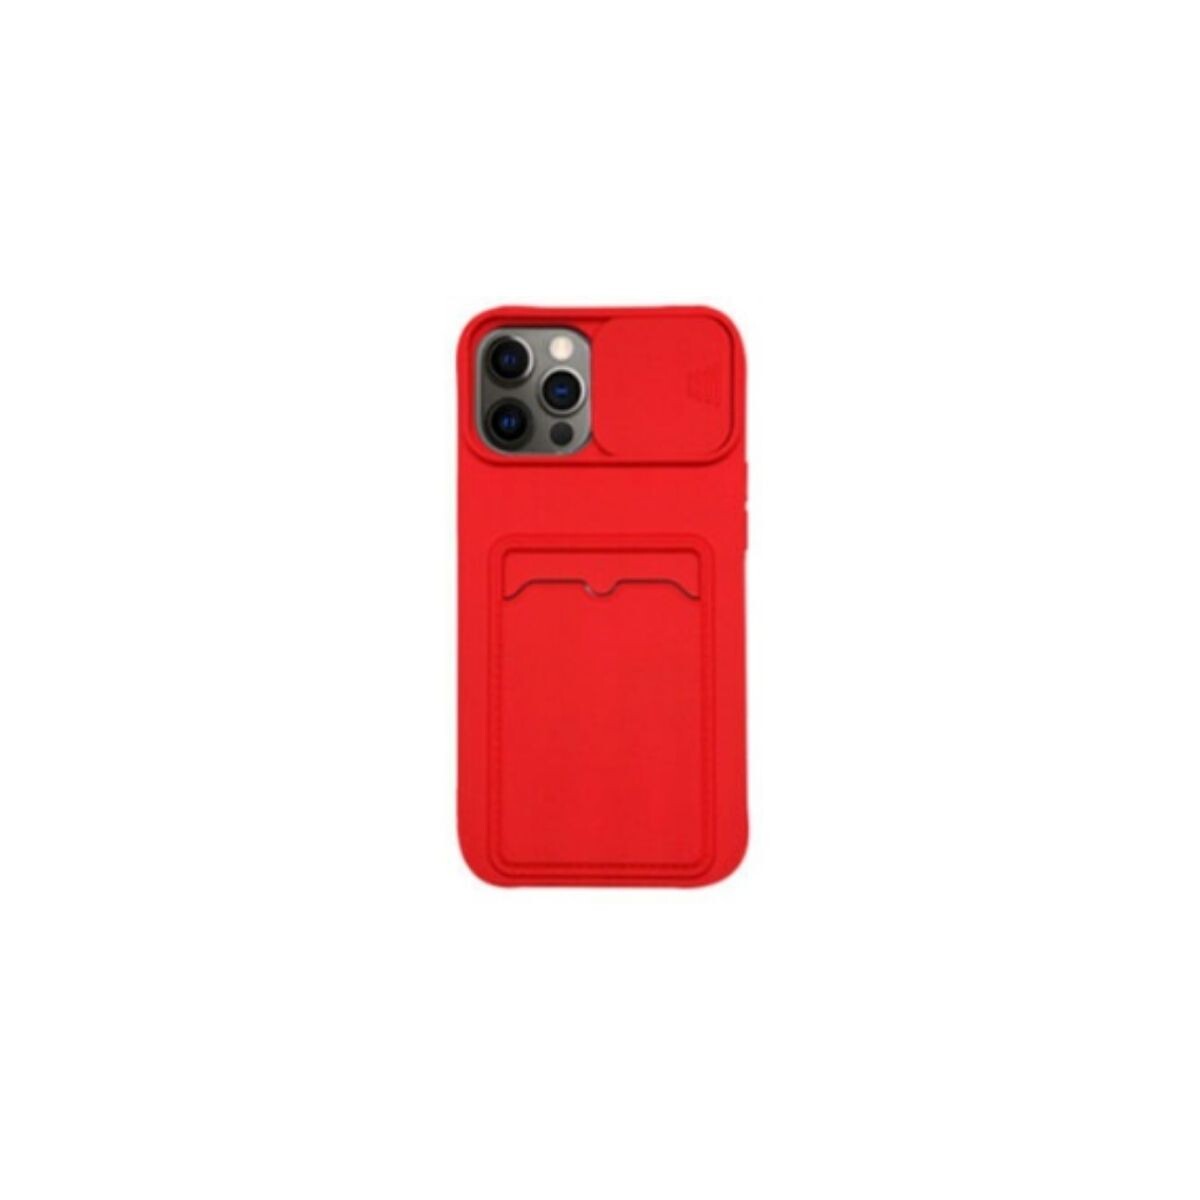 Protector cubre cámara para Samsung A52 rojo 